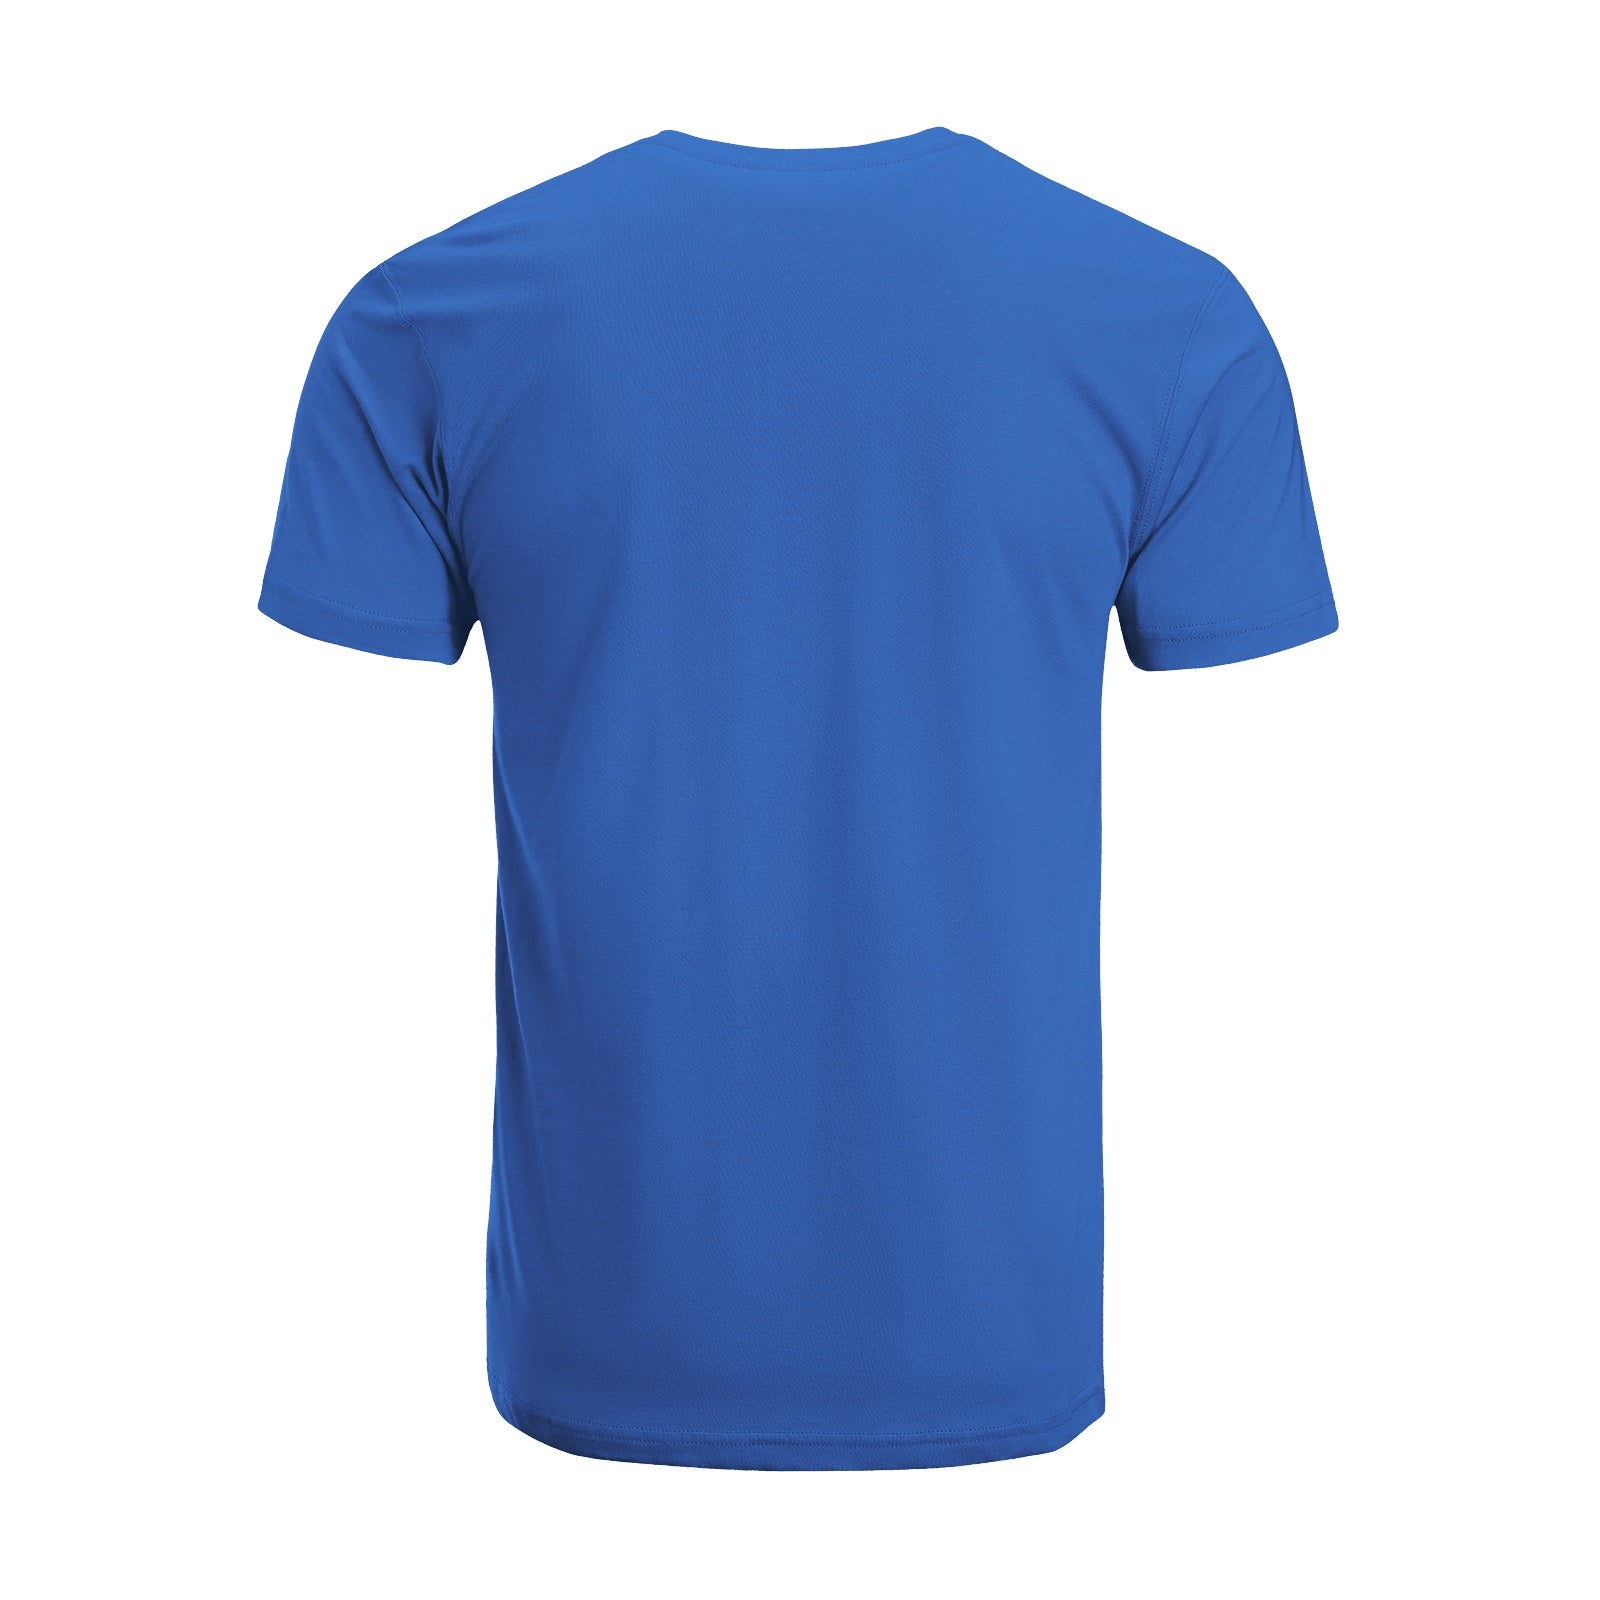 Unisex Short Sleeve Crew Neck Cotton Jersey T-Shirt Gym No. 49 - Tara-Outfits.com